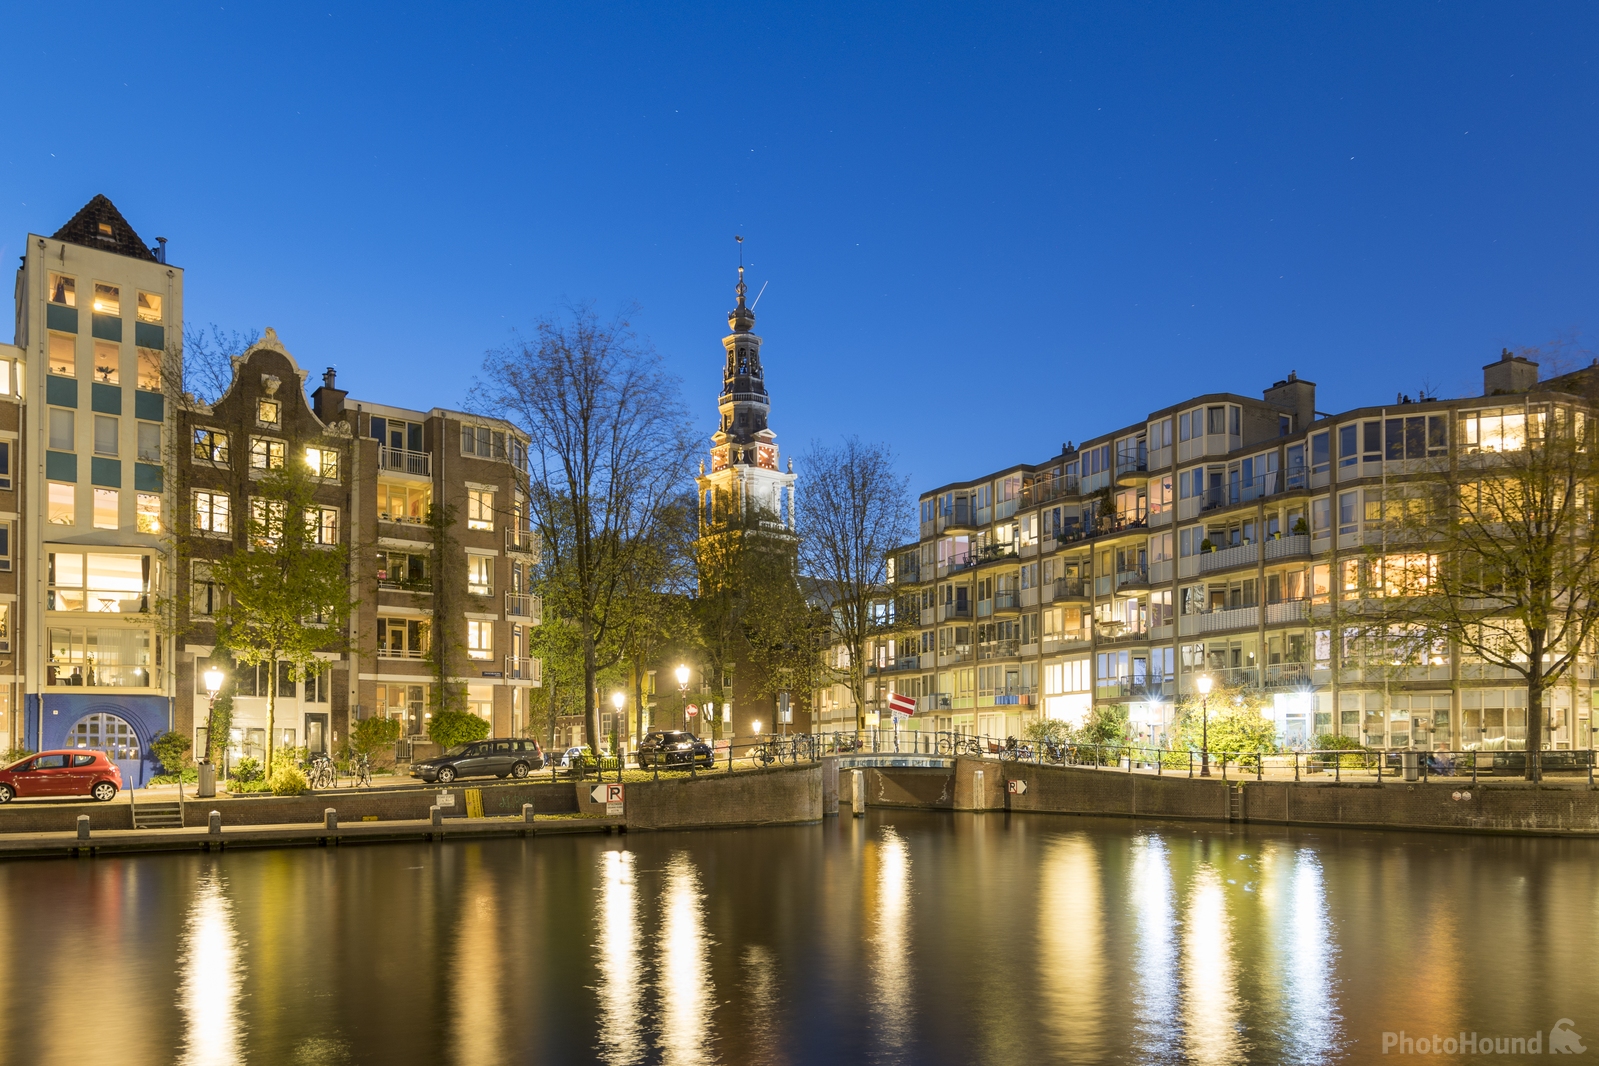 Image of Zwanenburgwal, Amsterdam by Jo Wheeler